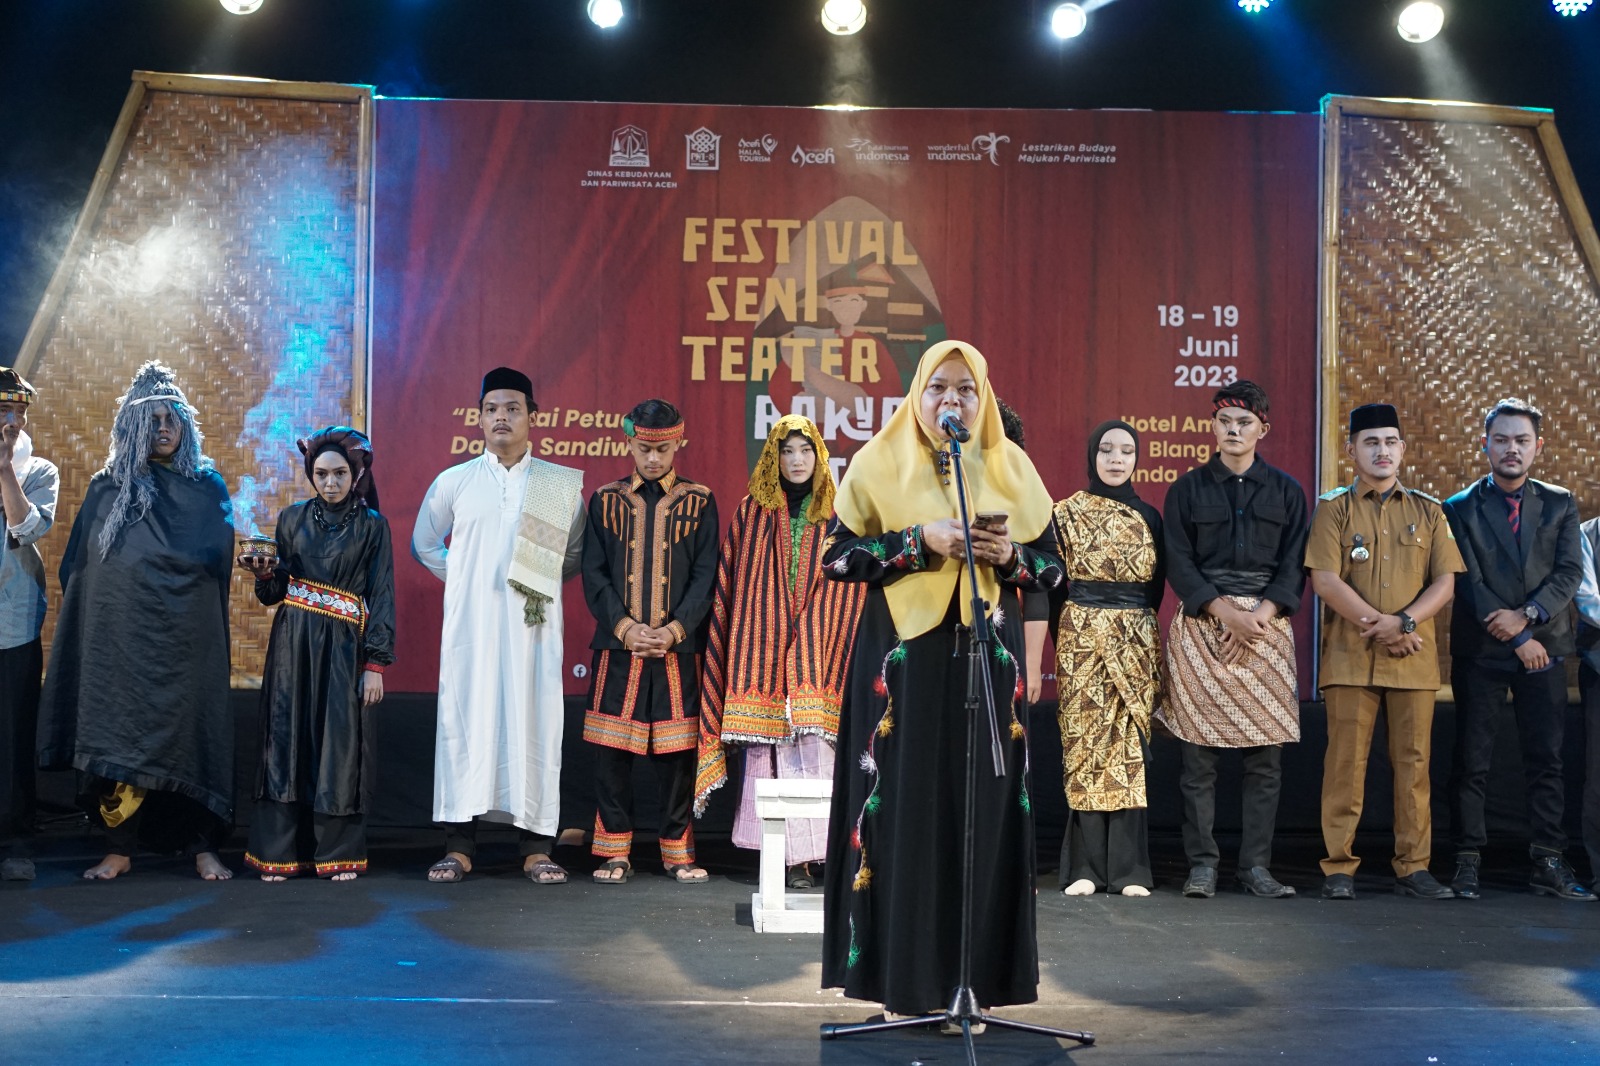 Disbudpar Aceh sebut seni teater berperan menjaga kelestarian budaya